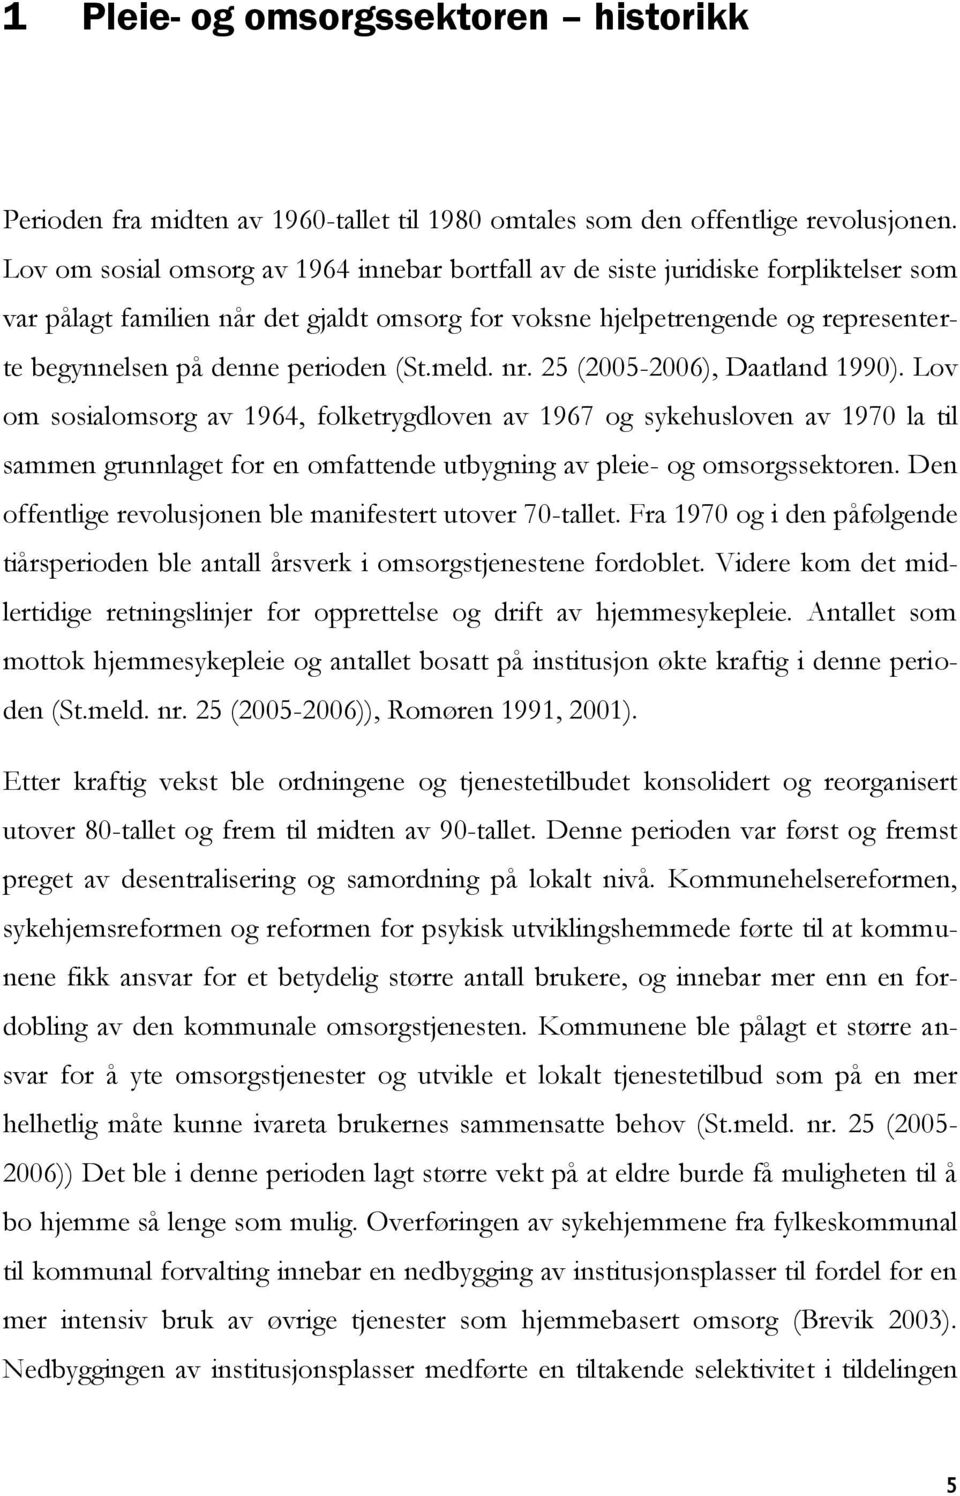 perioden (St.meld. nr. 25 (2005-2006), Daatland 1990).